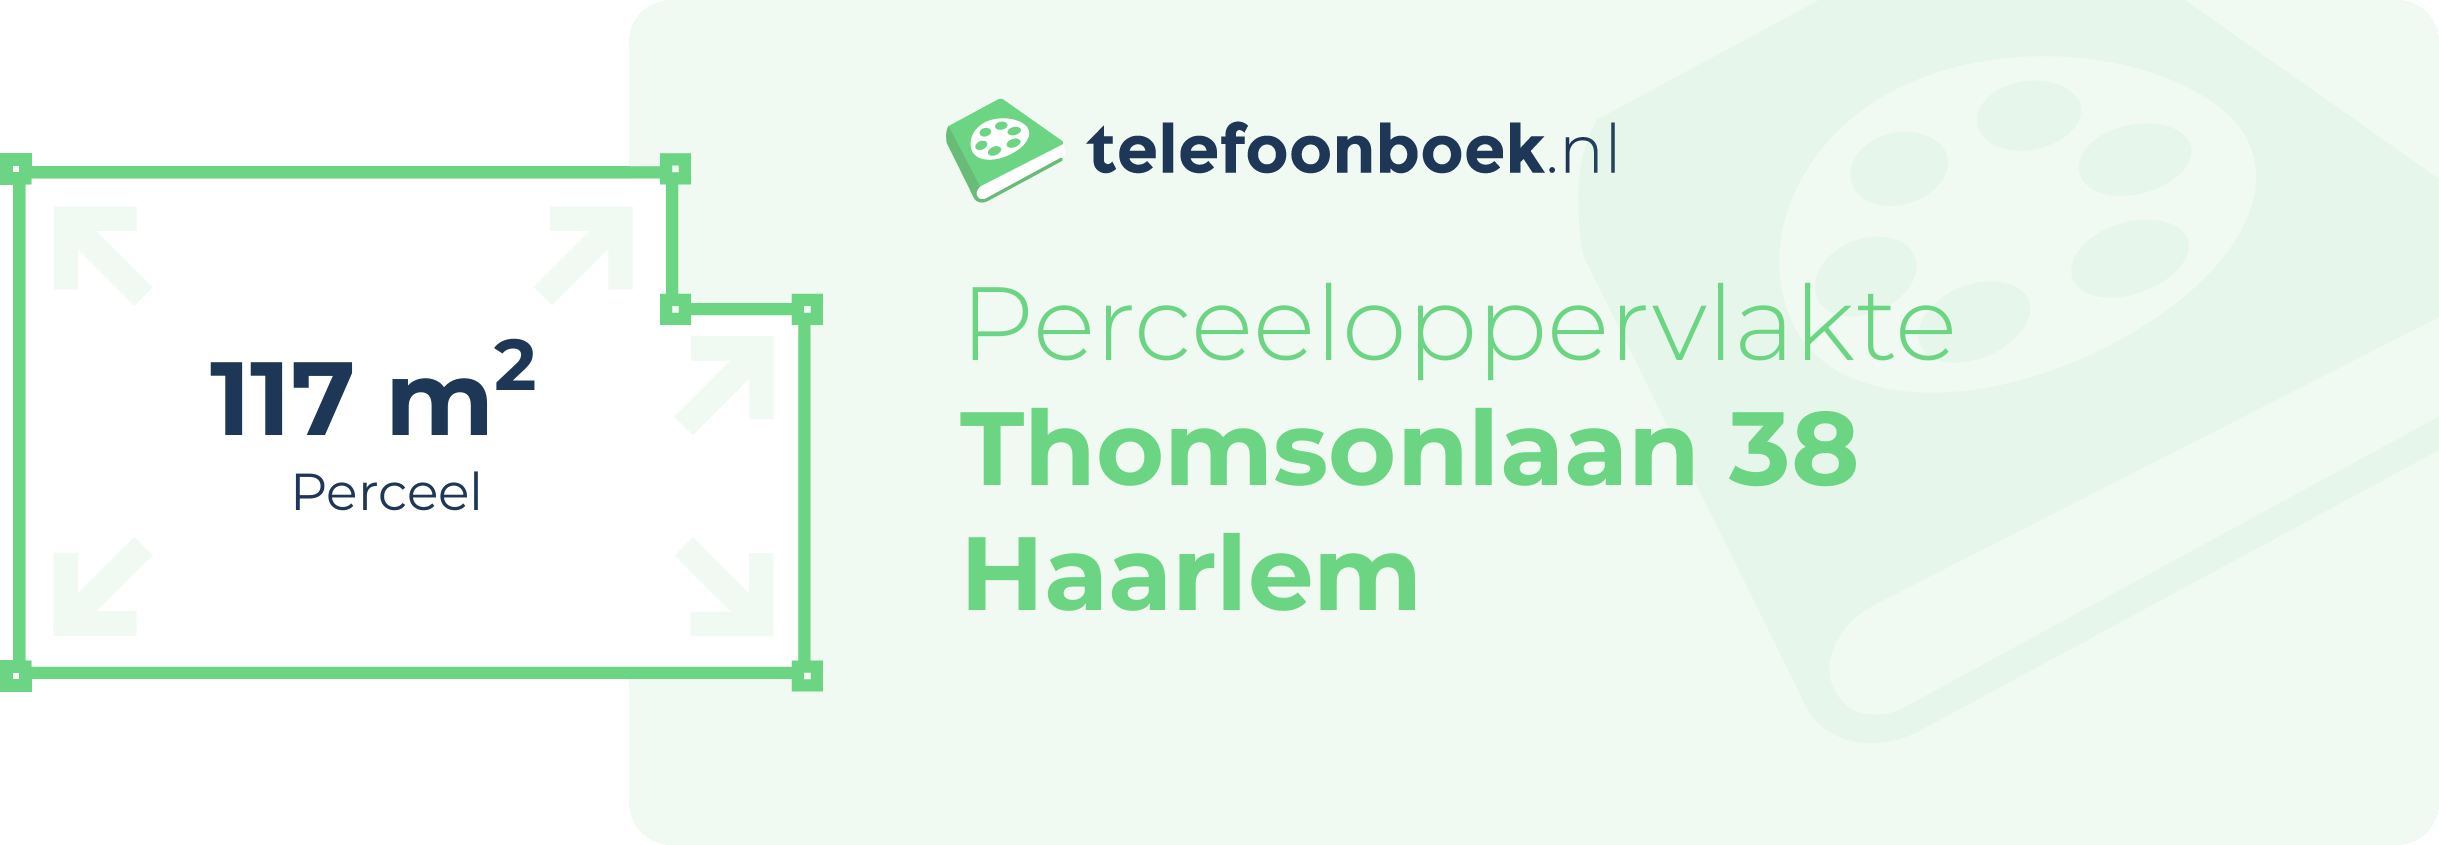 Perceeloppervlakte Thomsonlaan 38 Haarlem